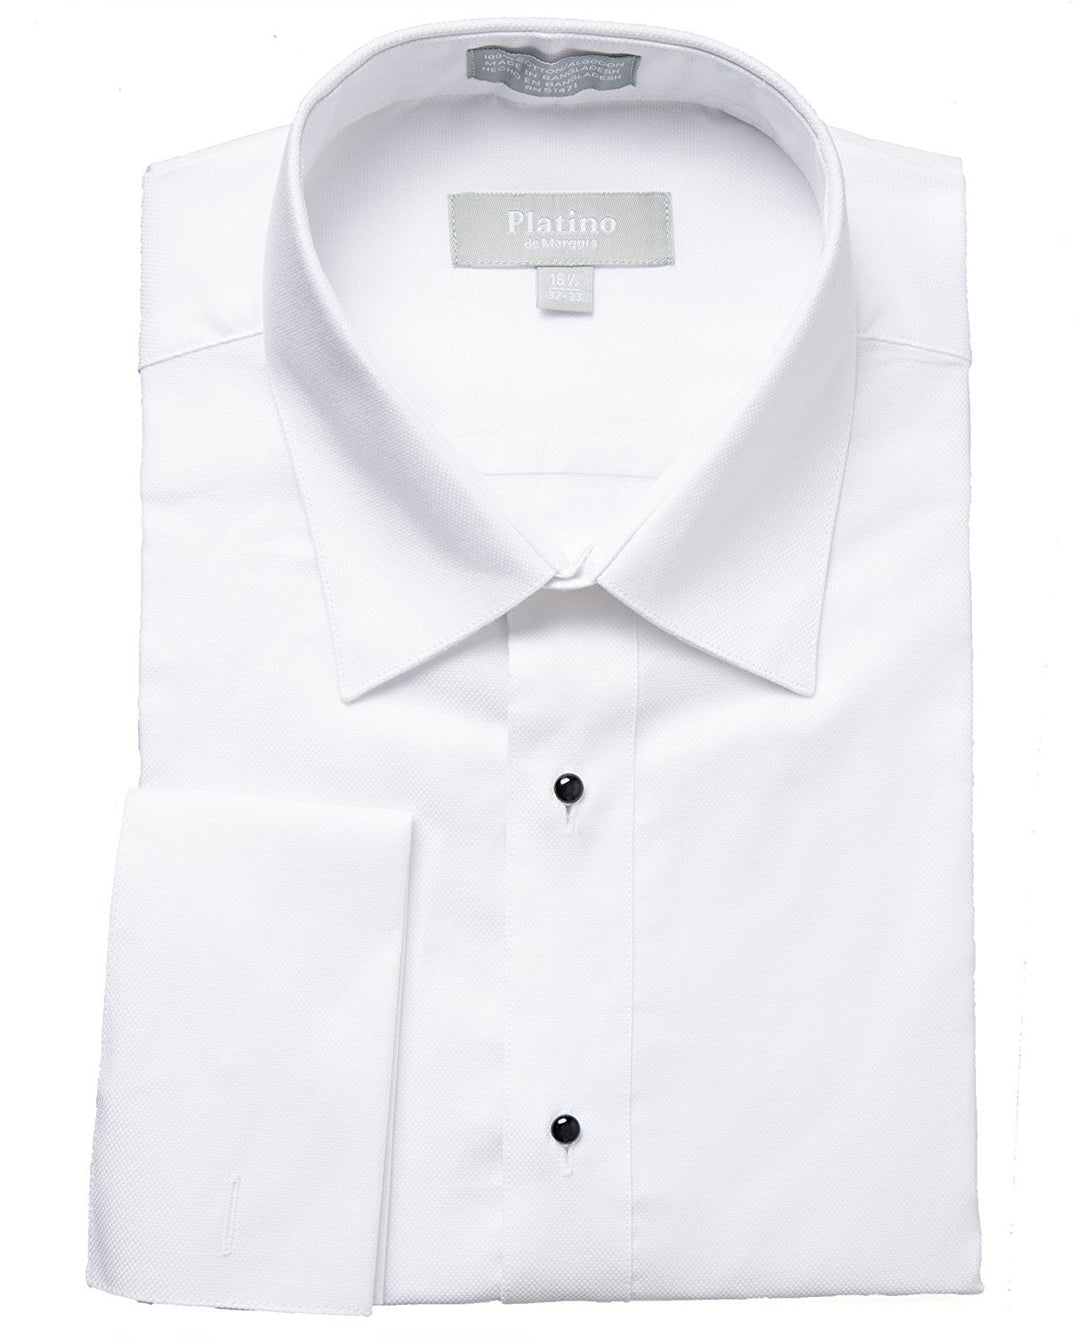 Marquis Platino Men's Formal Textured Regular Fit French Cuff Laydown Collar 100% Cotton Tuxedo Shirt